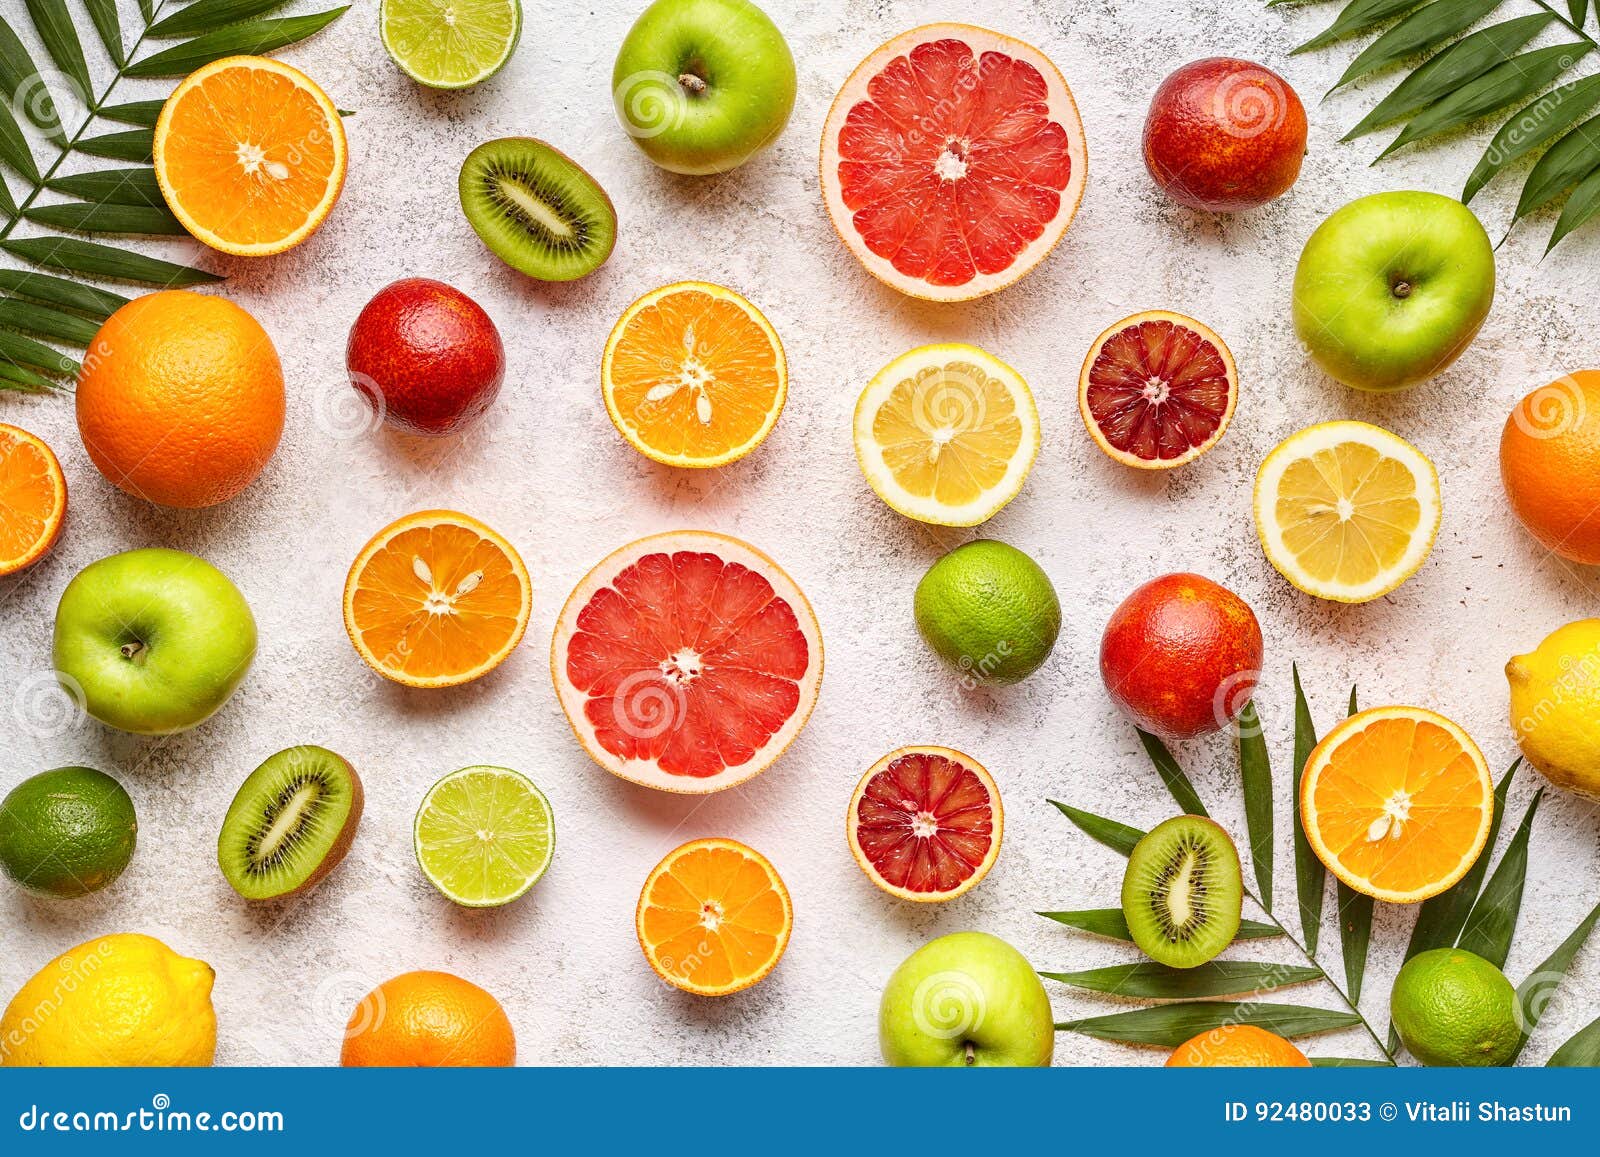 citrus fruits background mix flat lay, summer healthy vegetarian food, antioxidant detox nutrition diet